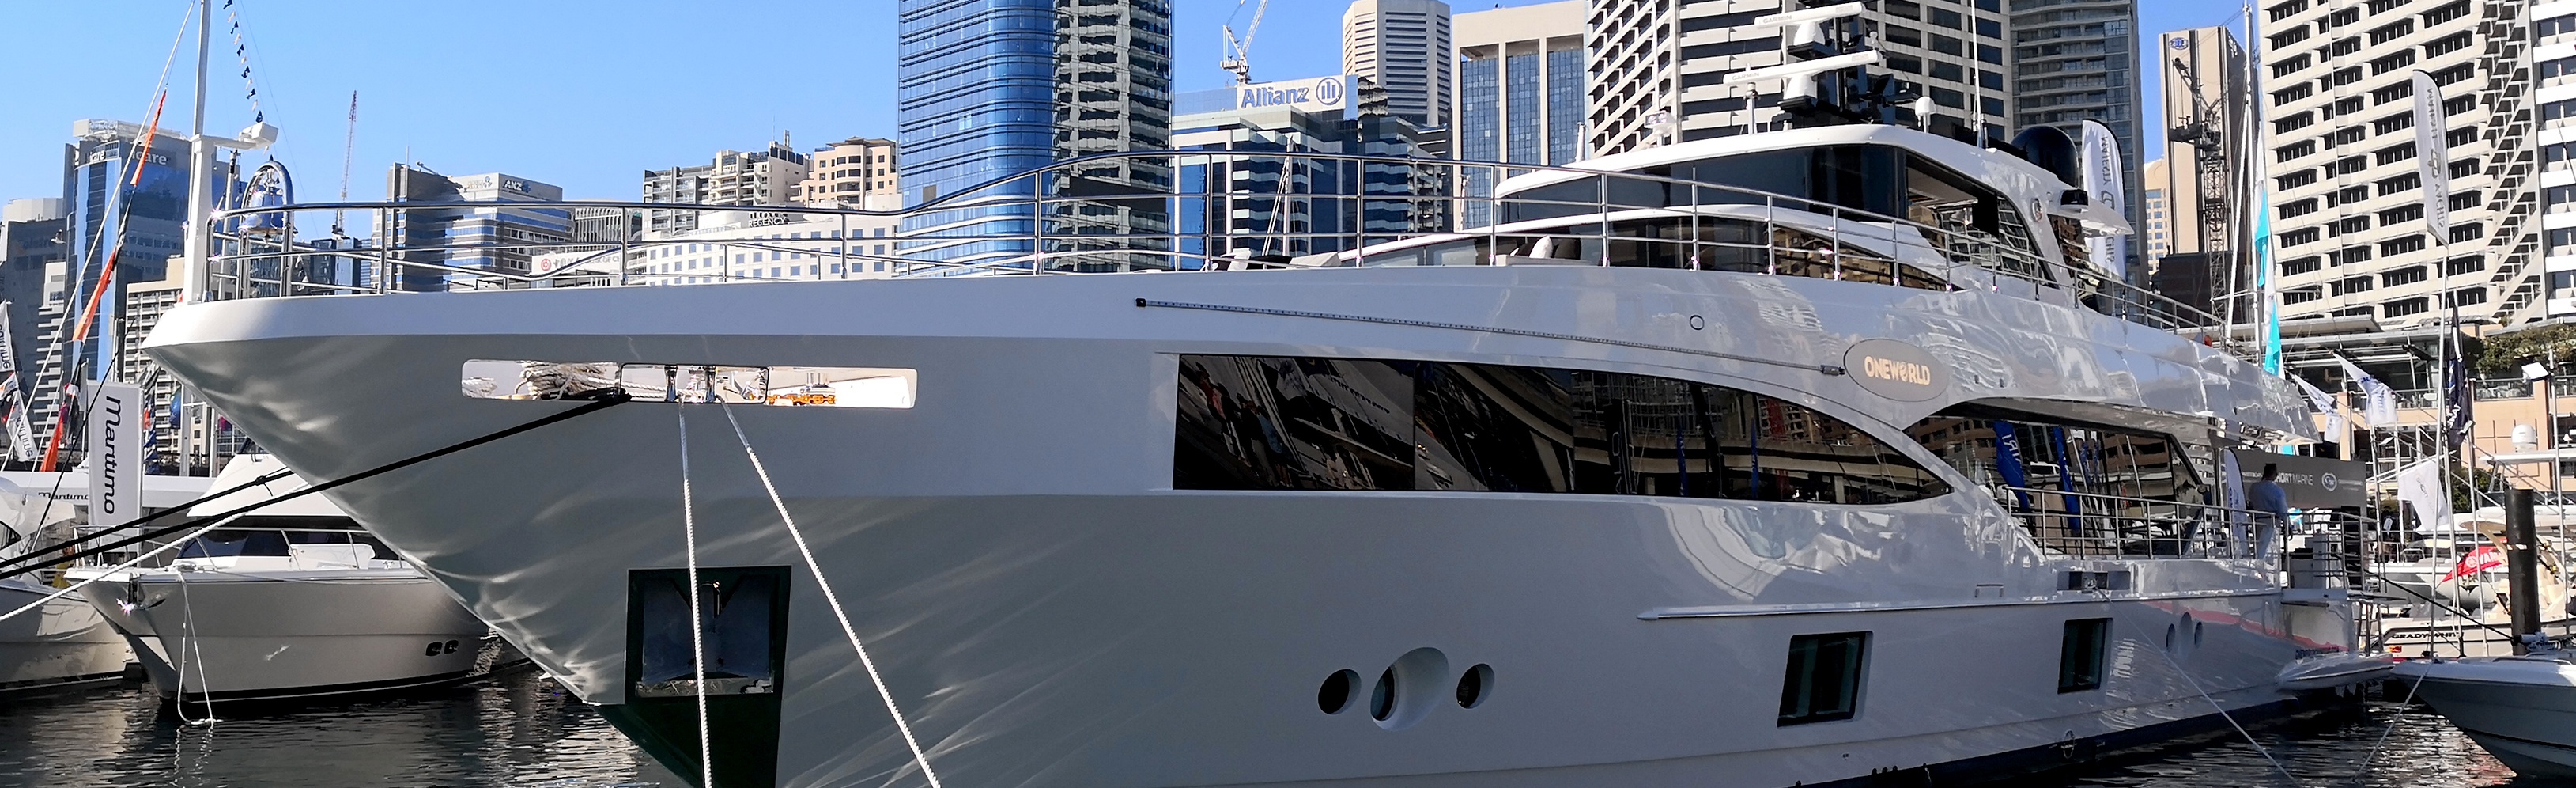 Majesty-100,-Sydney-Boat-Show-2018